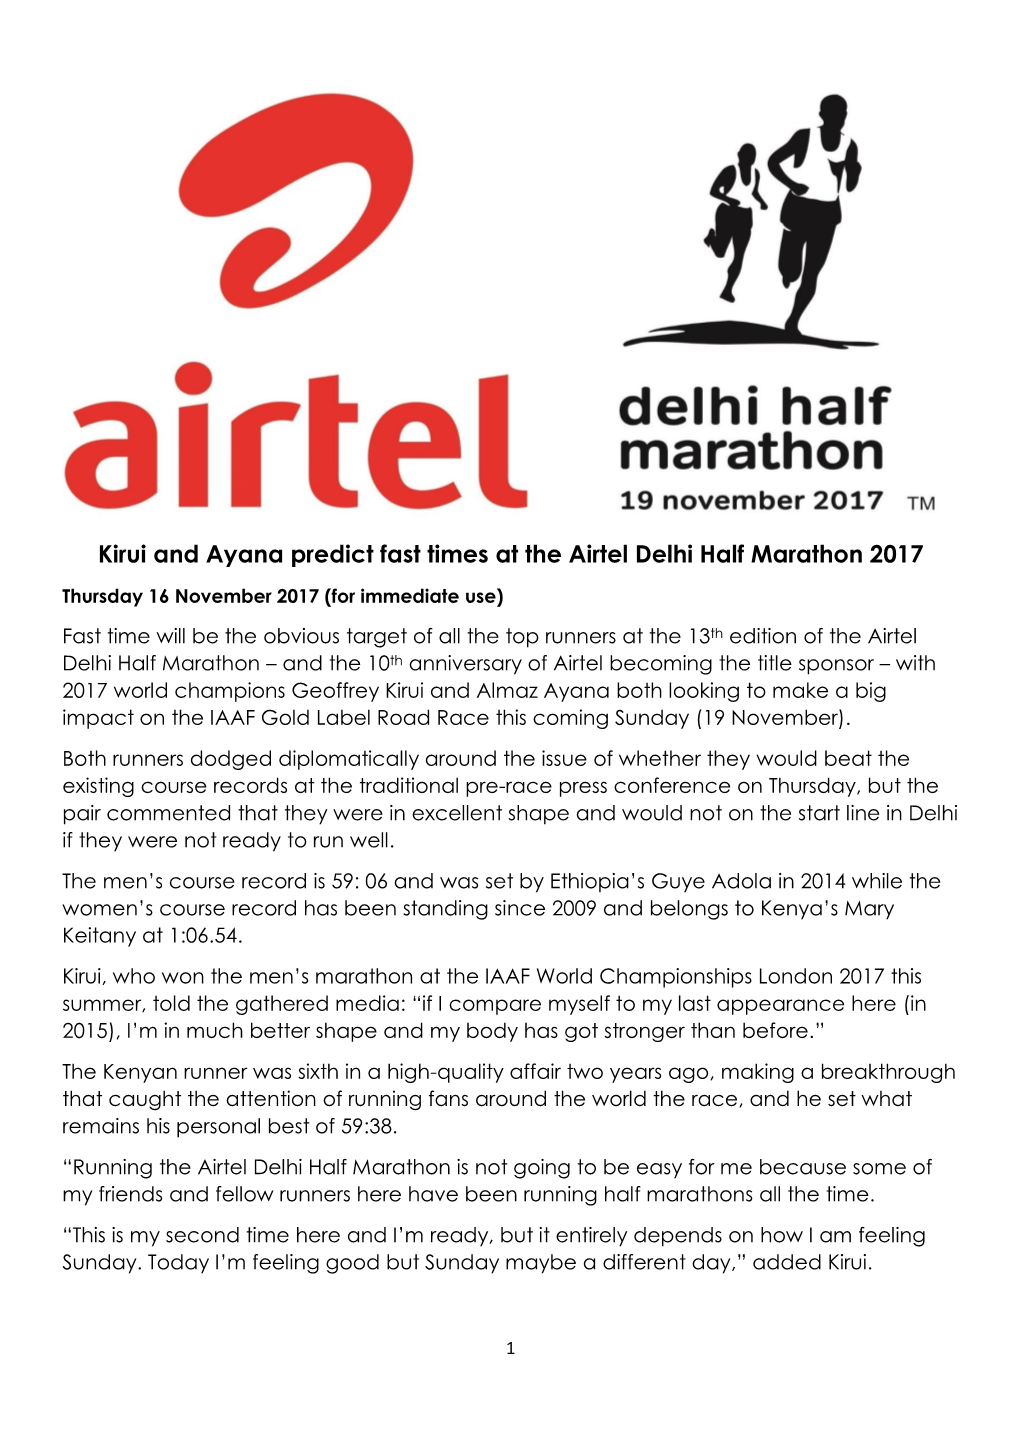 Kirui and Ayana Predict Fast Times at the Airtel Delhi Half Marathon 2017